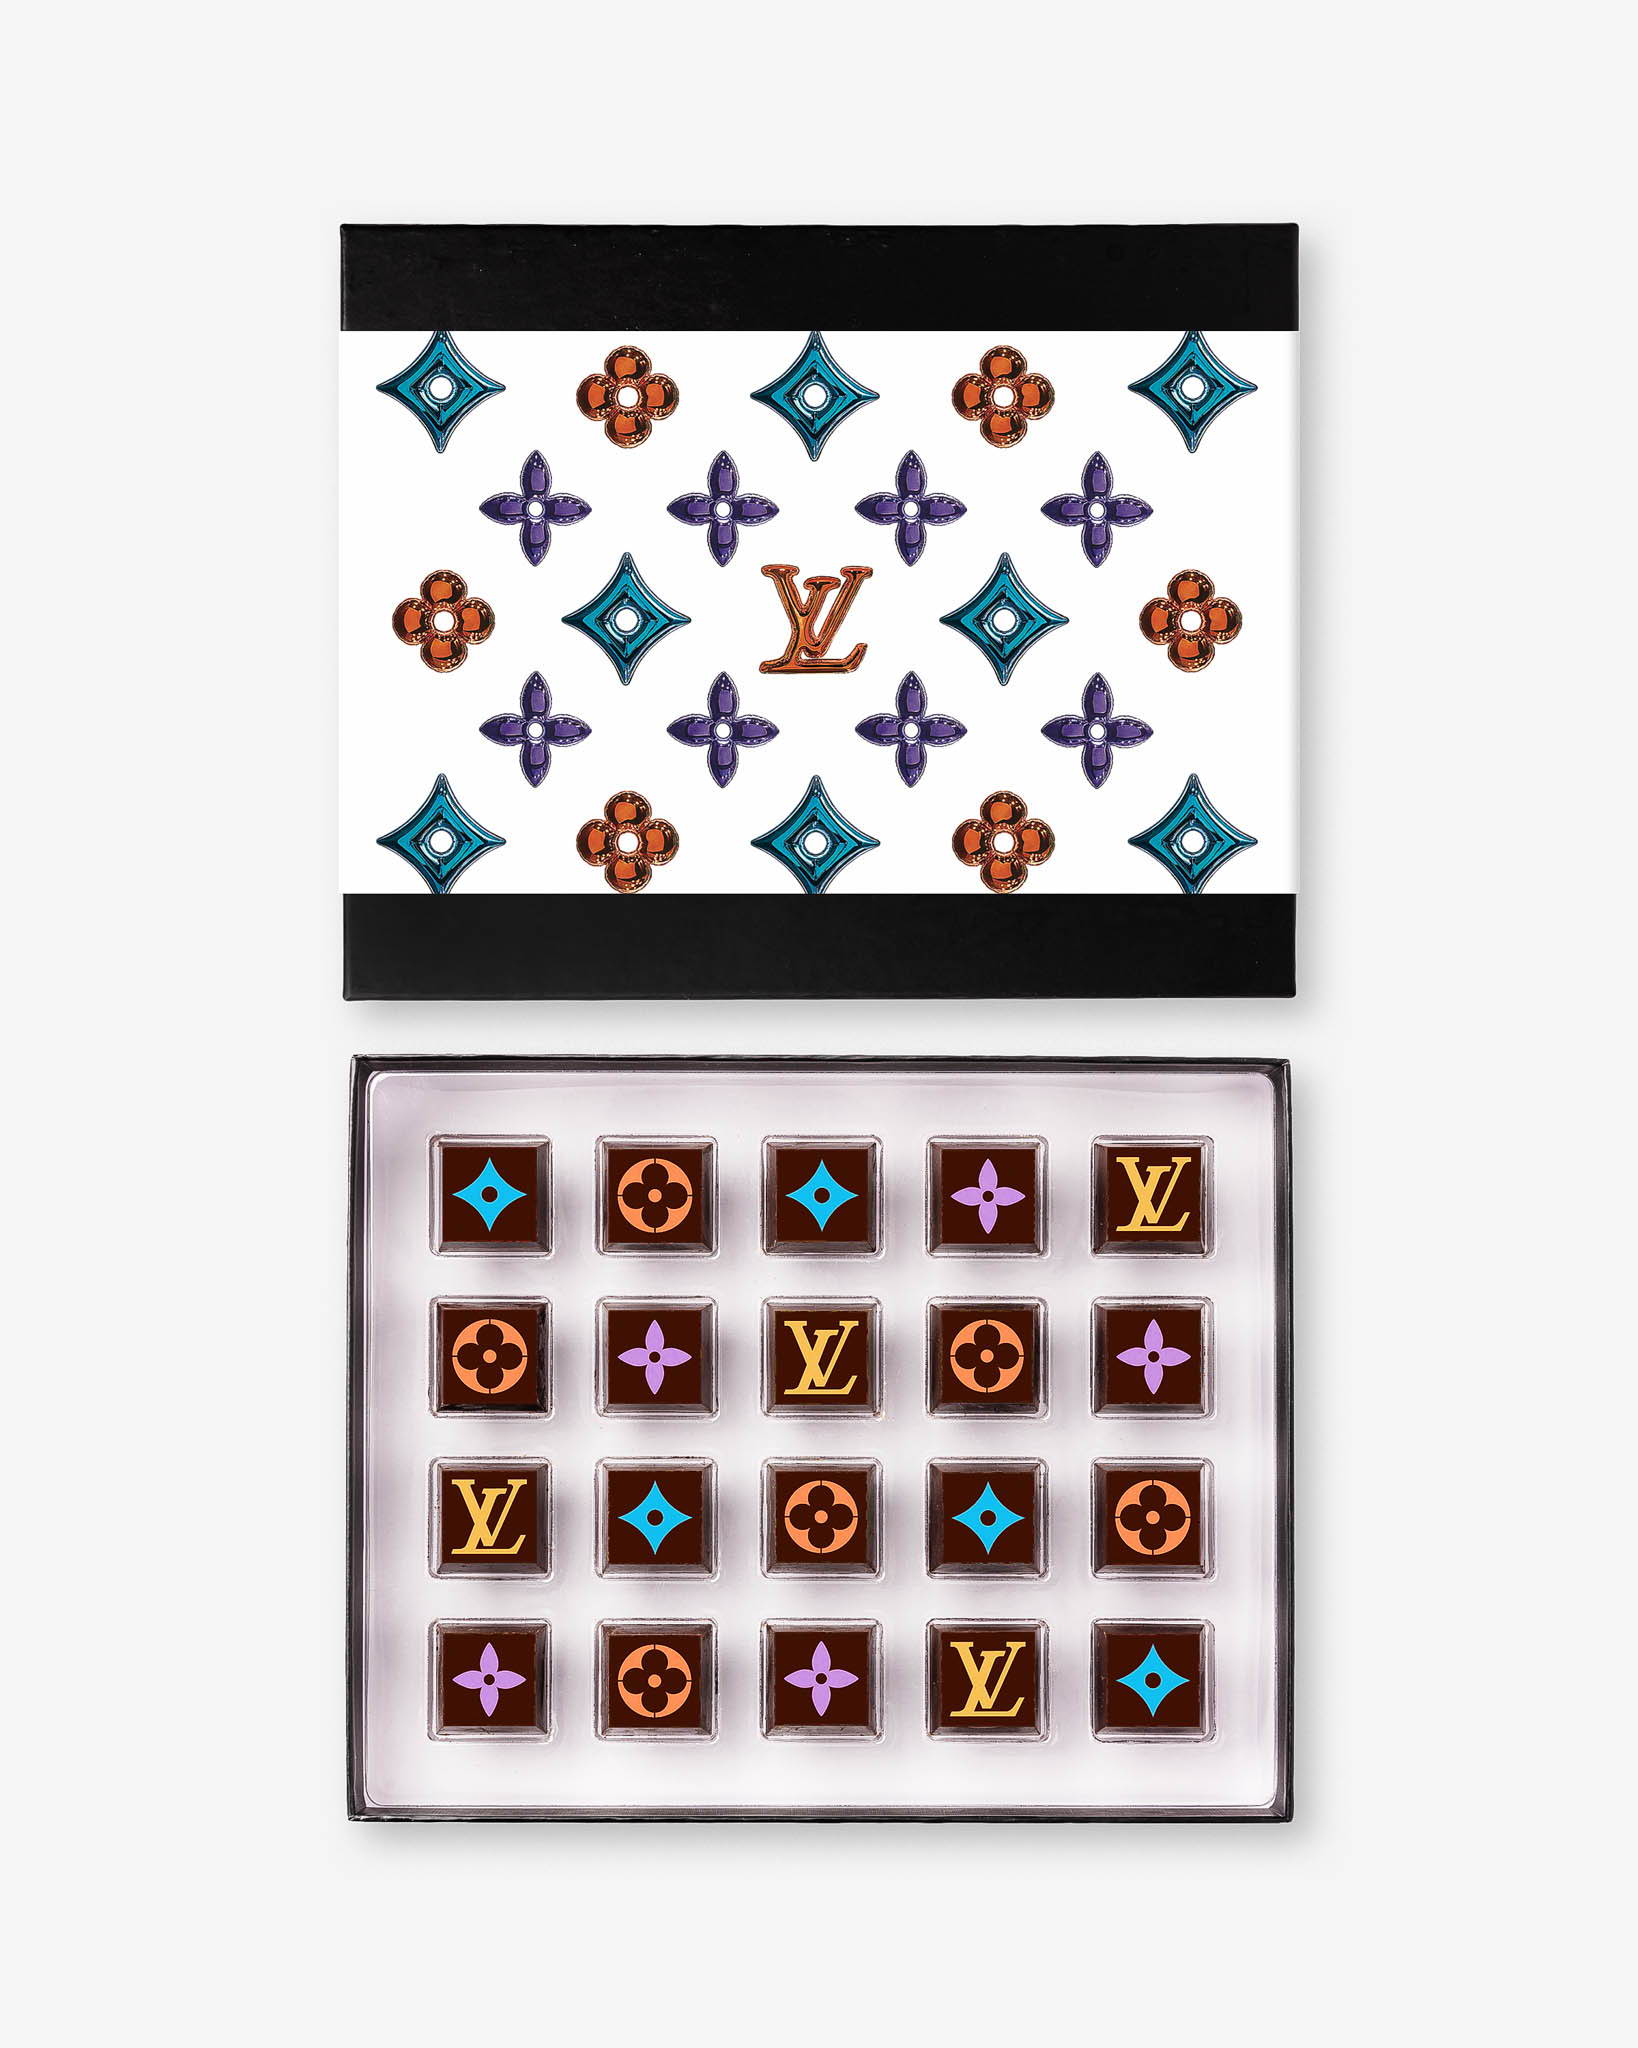 Louis Vuitton Gift Card Minimum